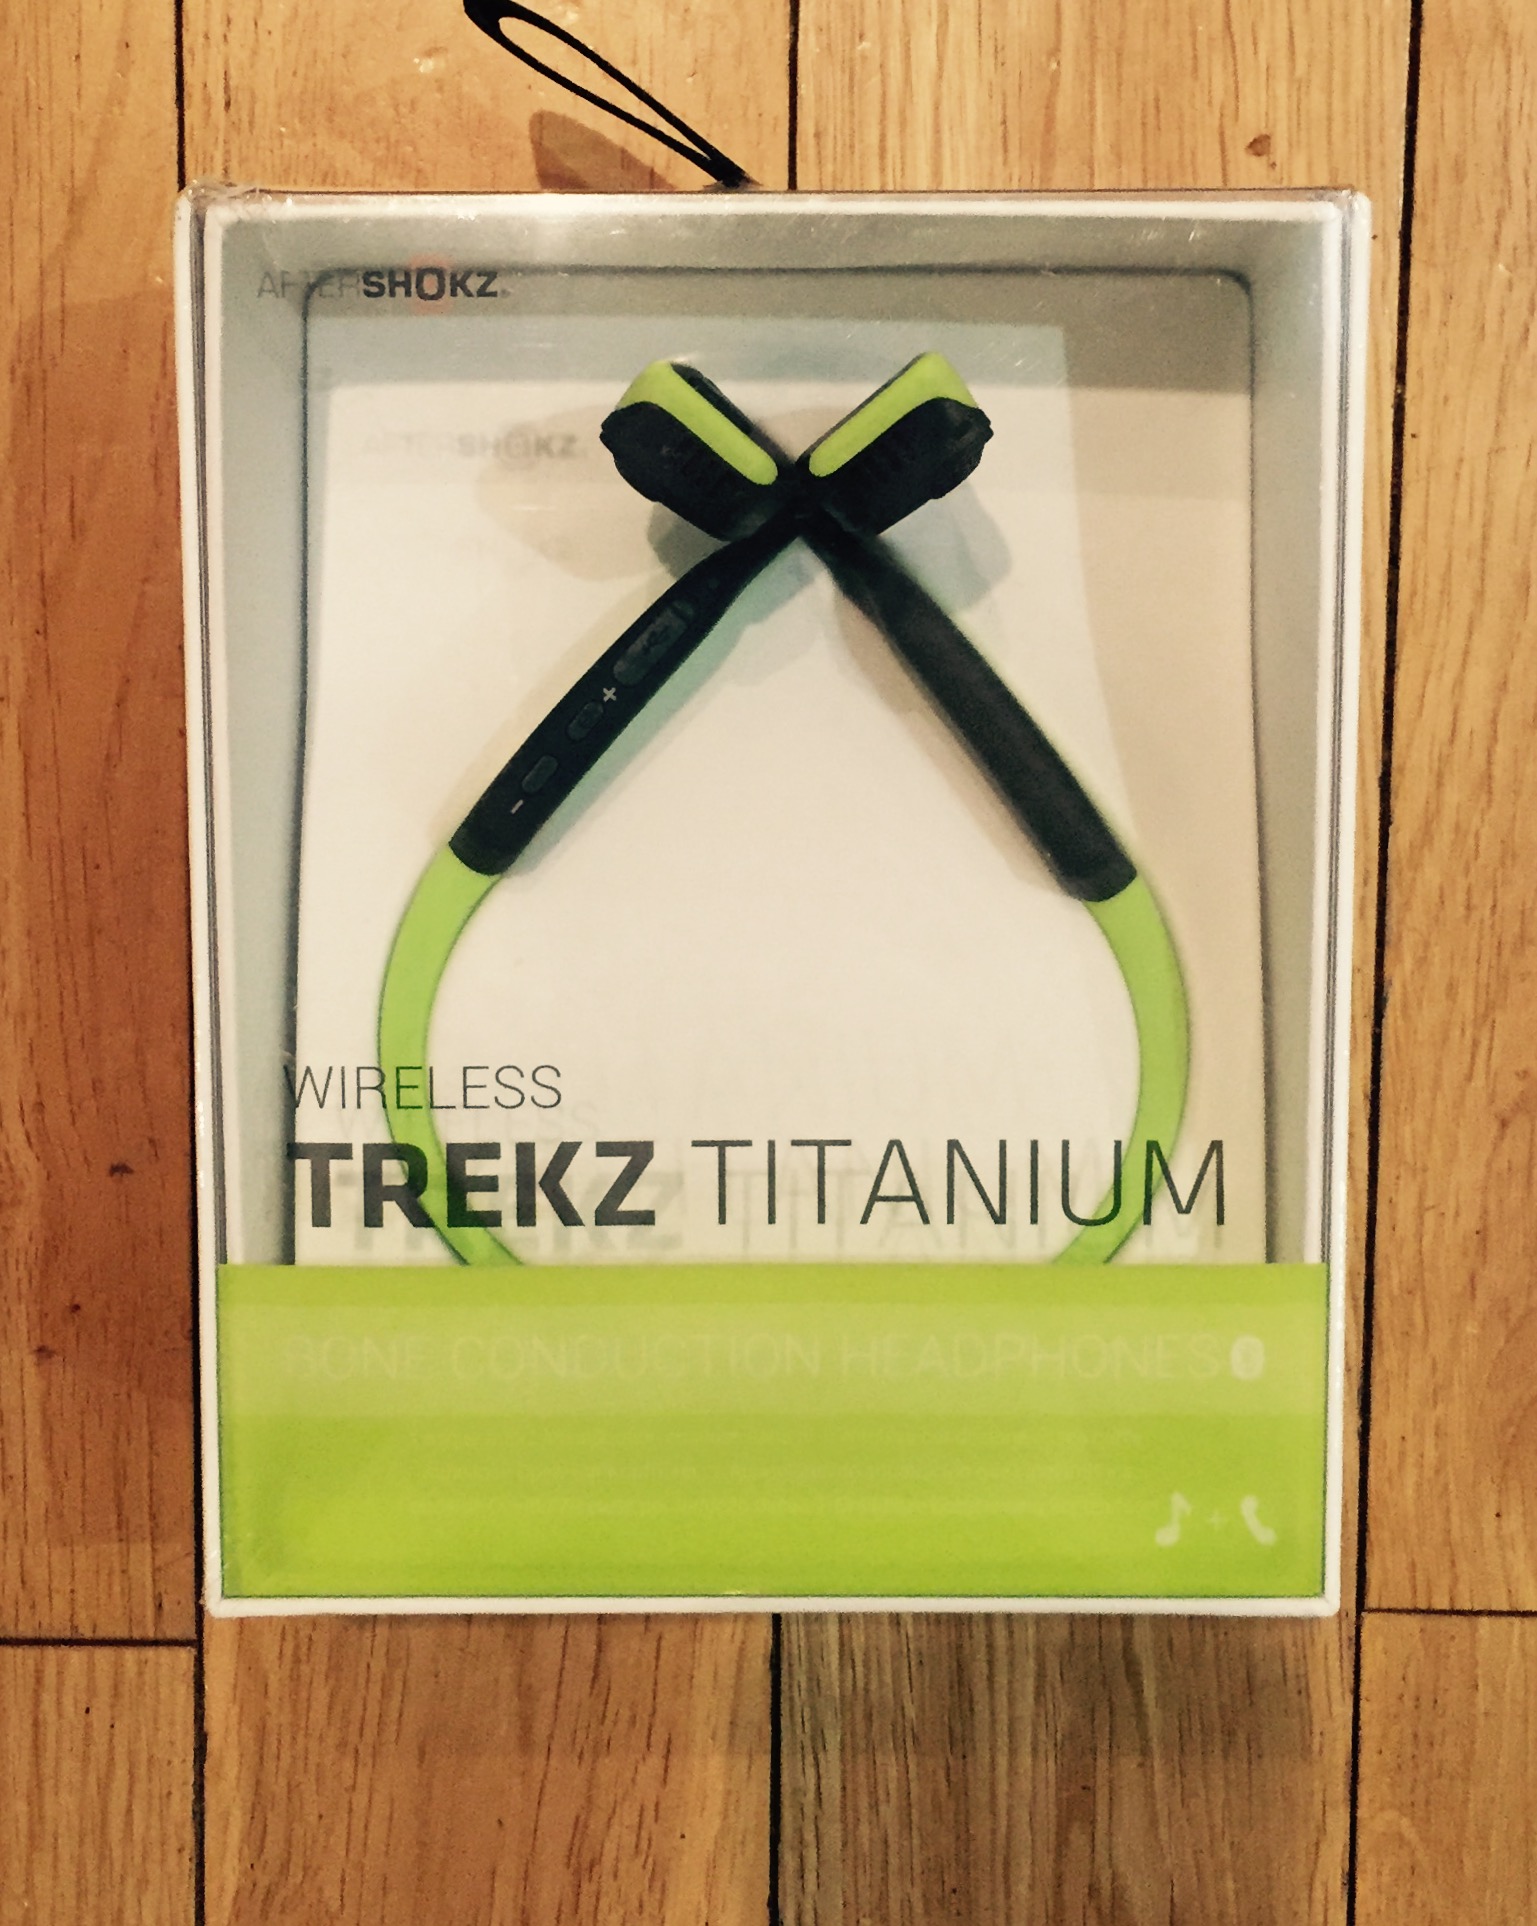 AfterShokz Trekz Titanium wireless headphones review